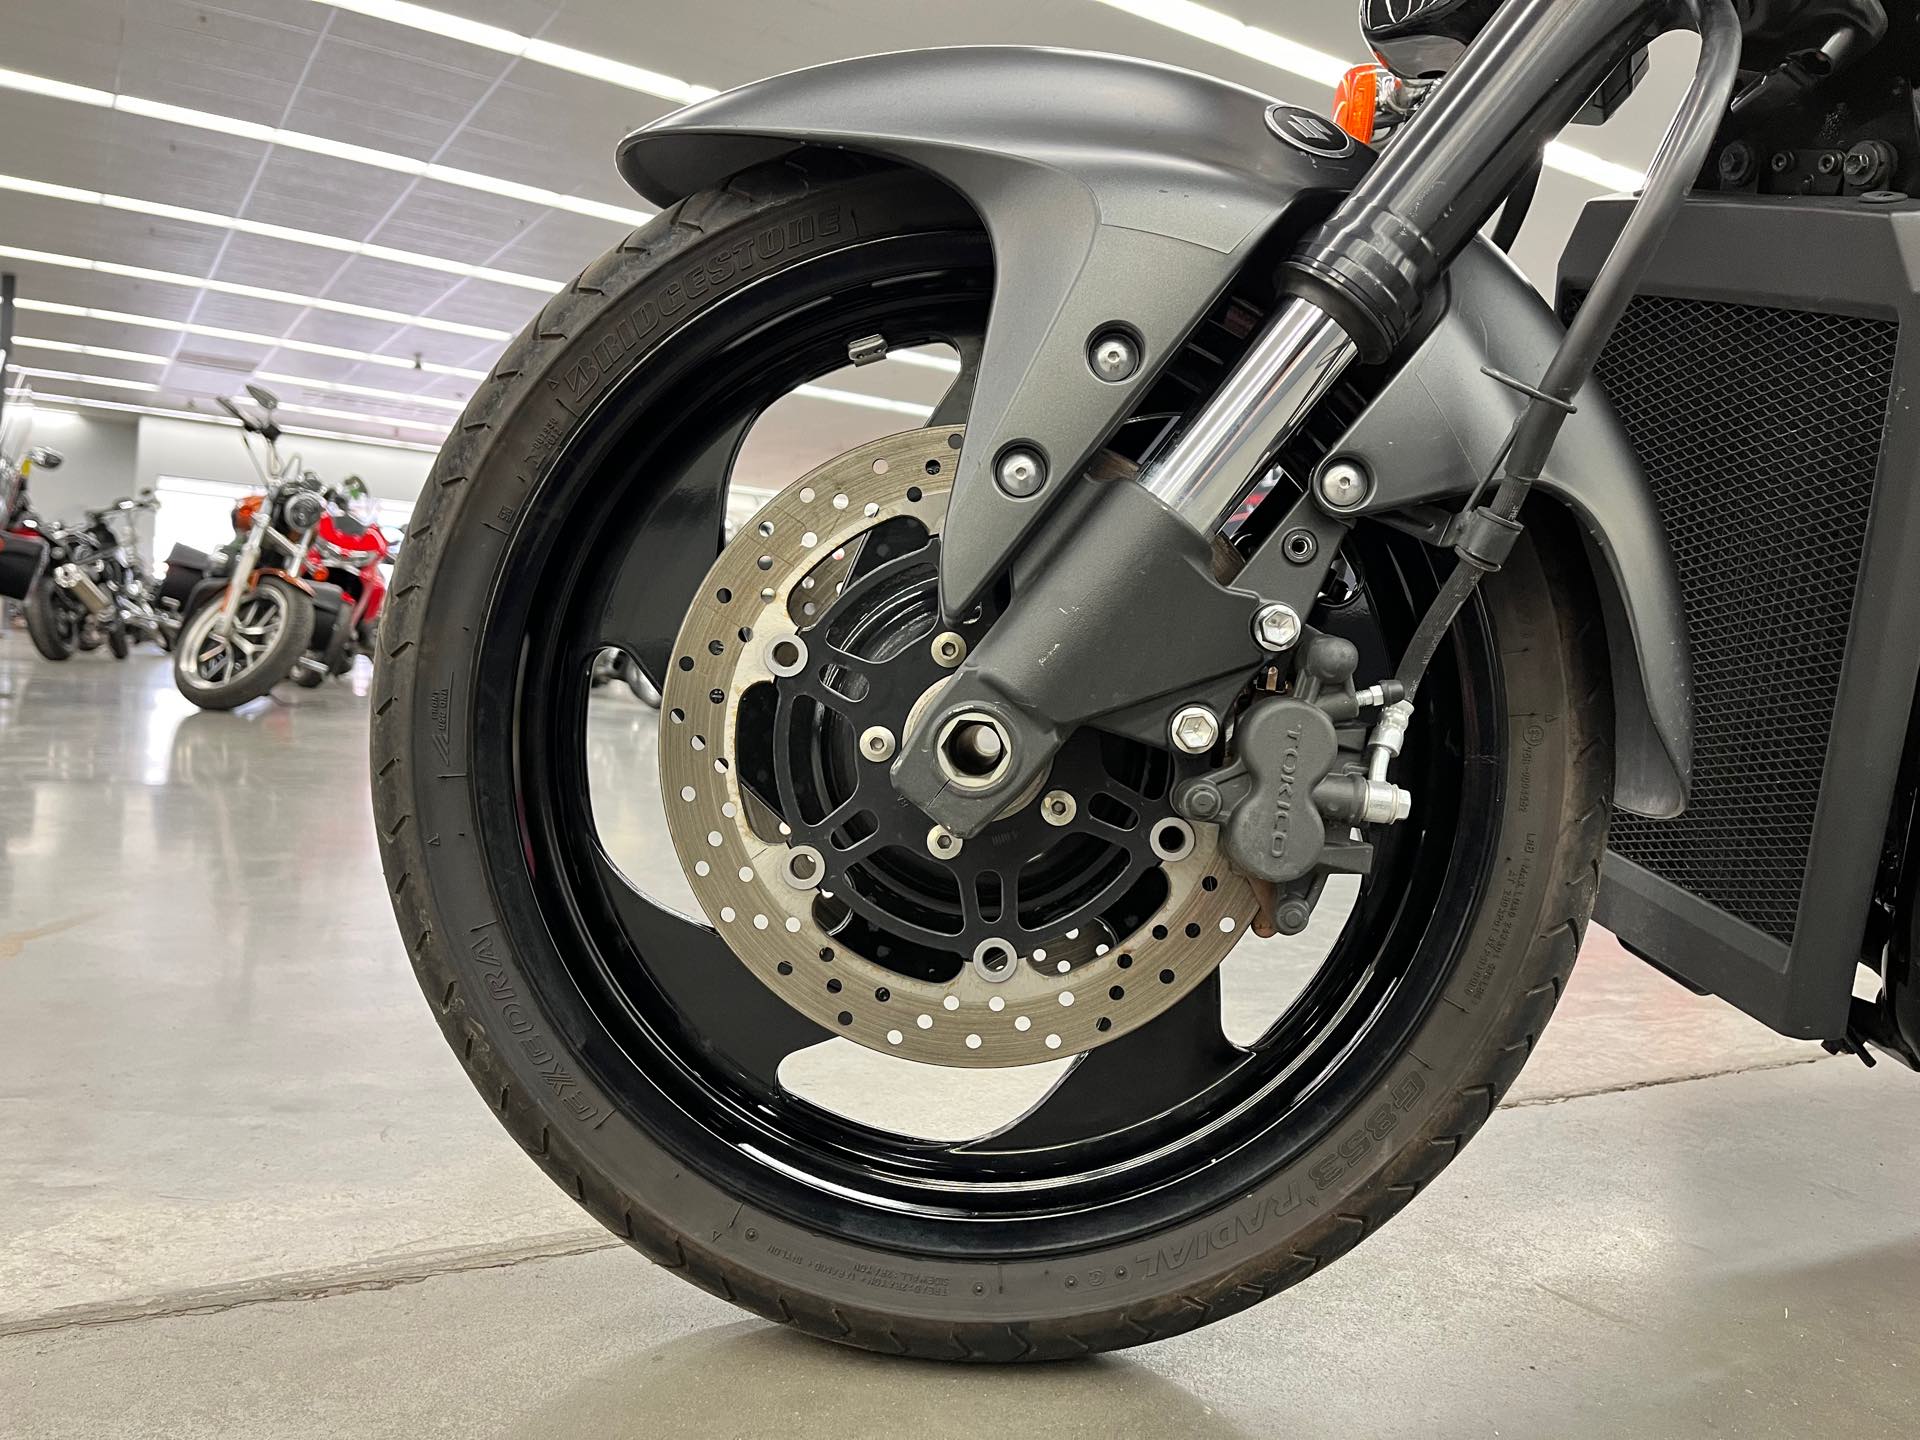 2018 Suzuki Boulevard M90 at Aces Motorcycles - Denver